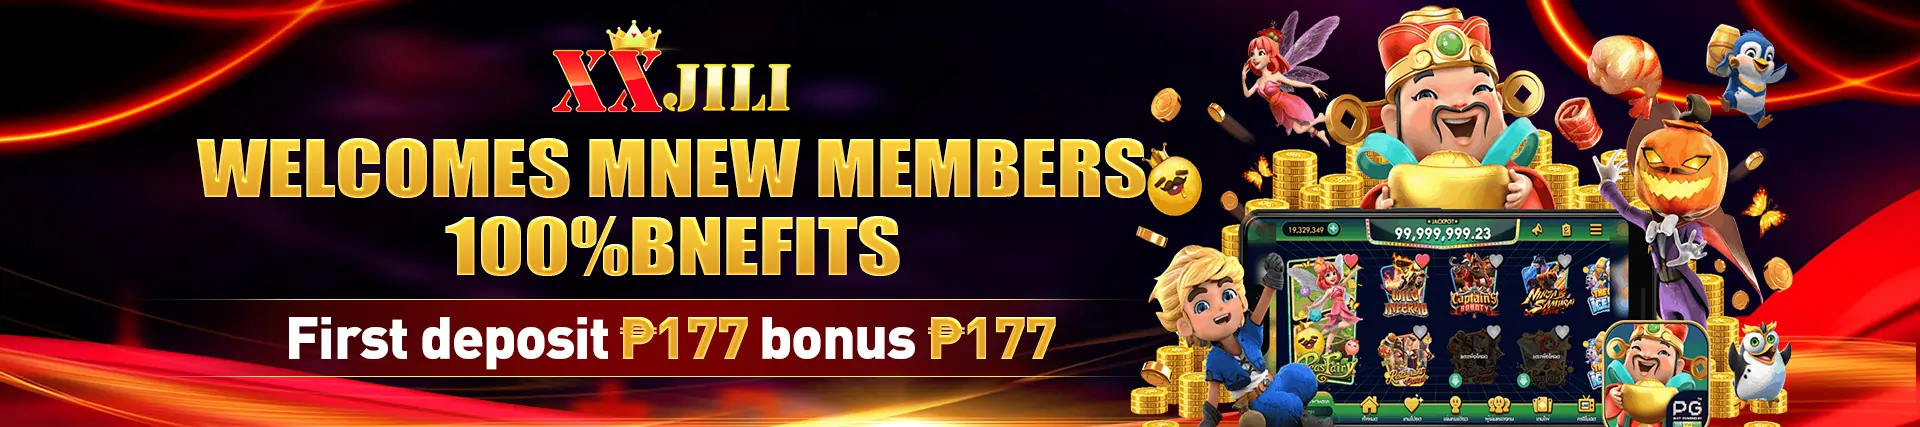 100% new member bonus